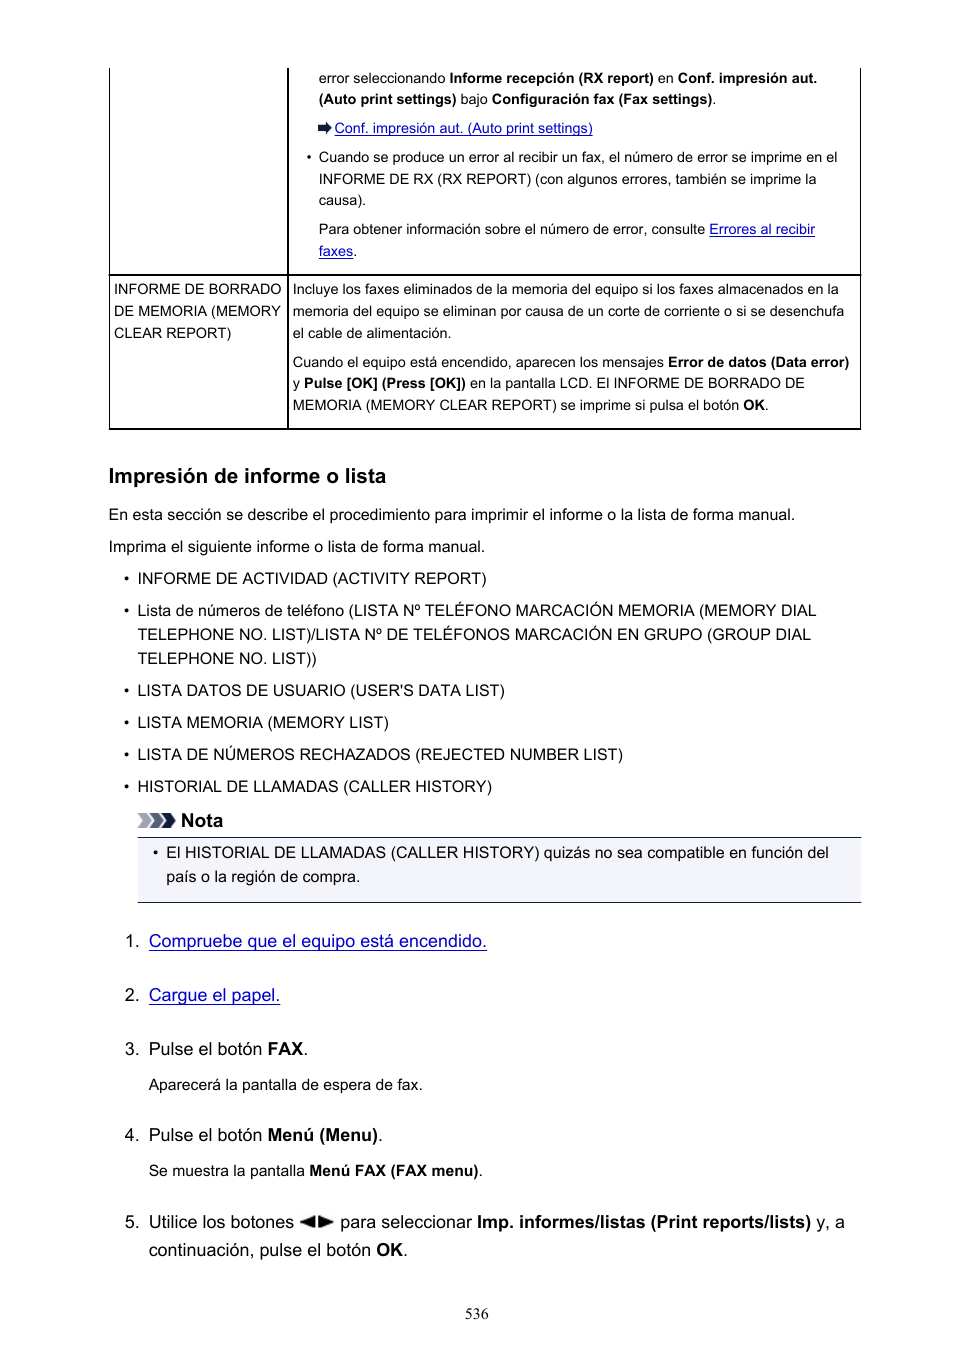 Impresión de informe o lista | Canon PIXMA MX475 Manual del usuario | Página 536 / 725